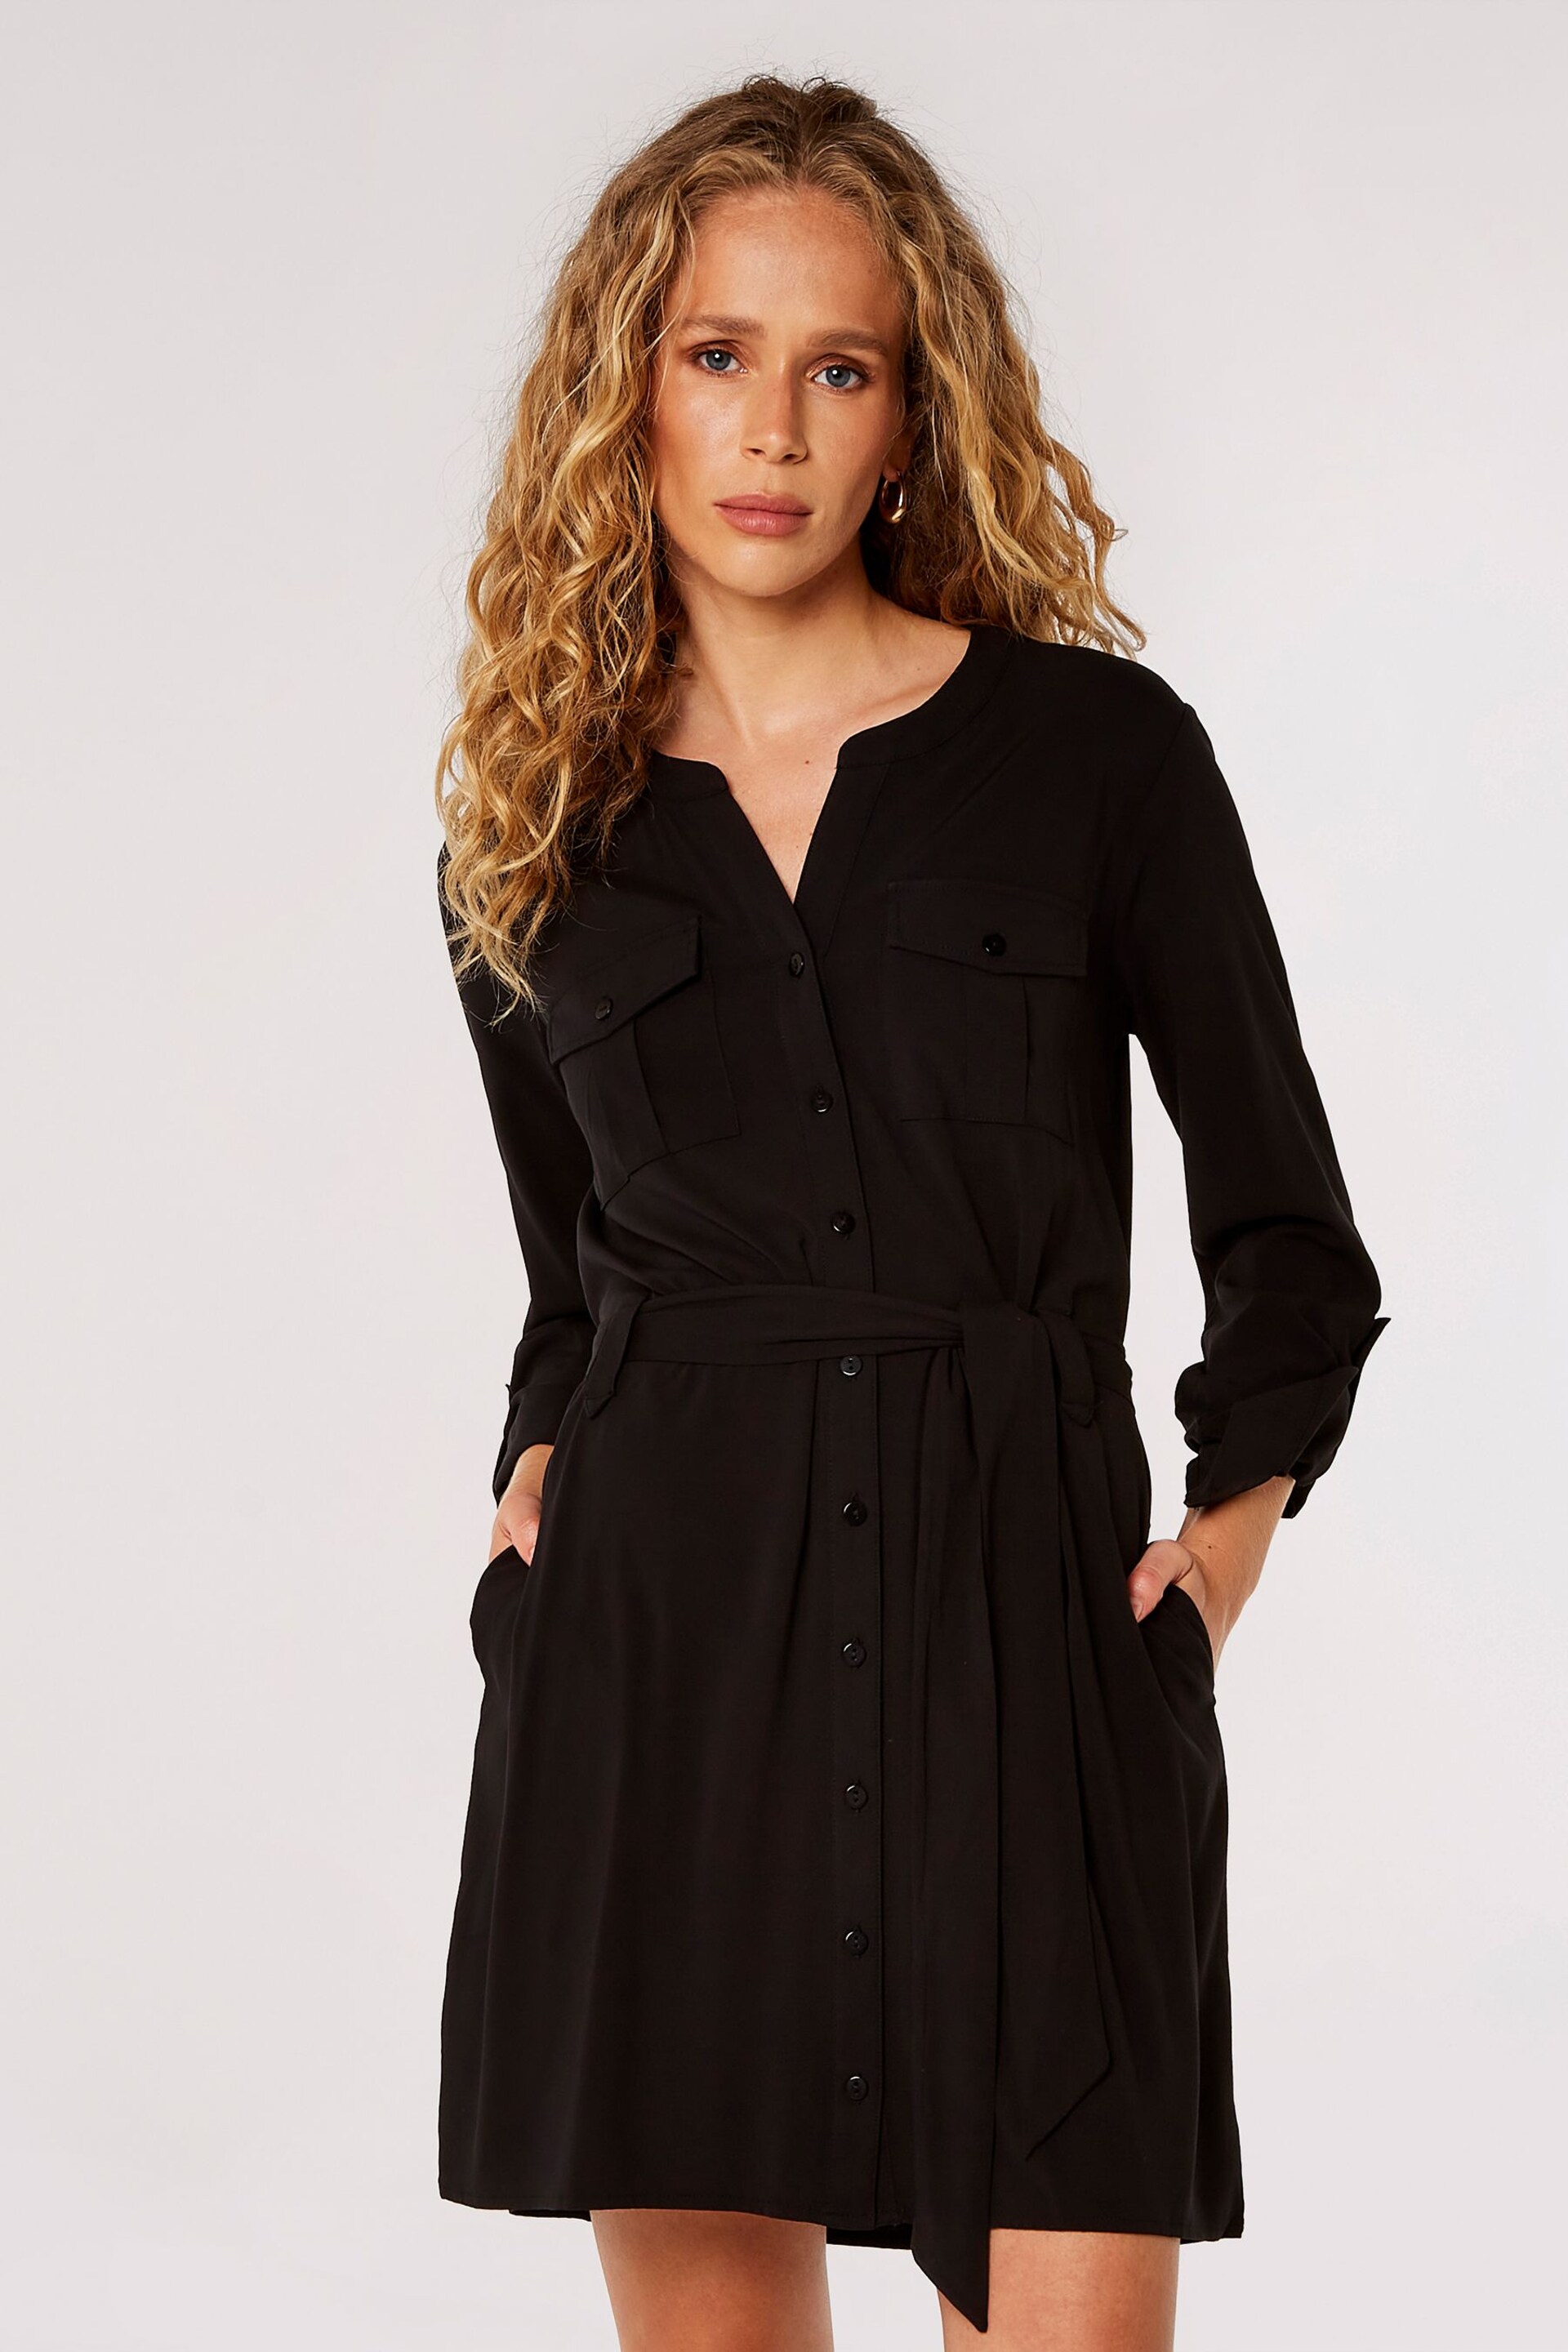 Apricot Black Utility Shirt Dress - Image 1 of 4